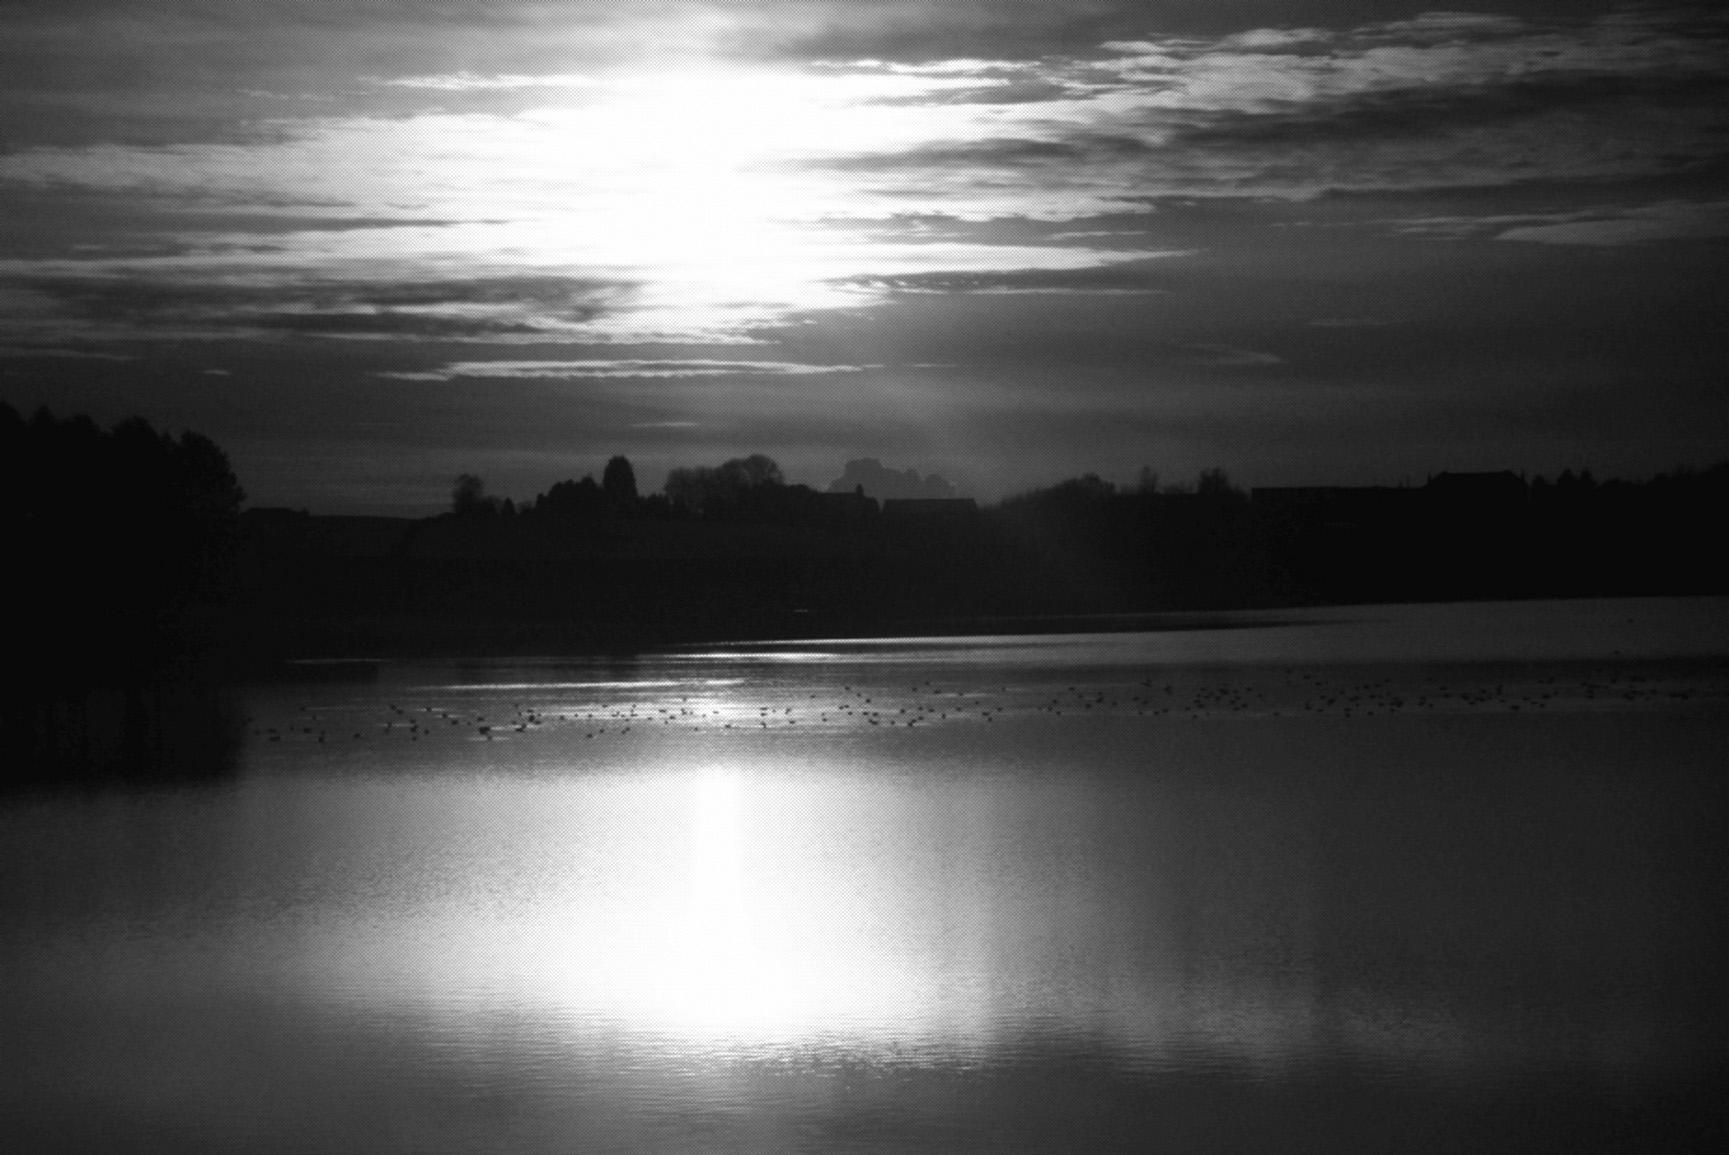 Hollingworth Lake Sunset in black & white